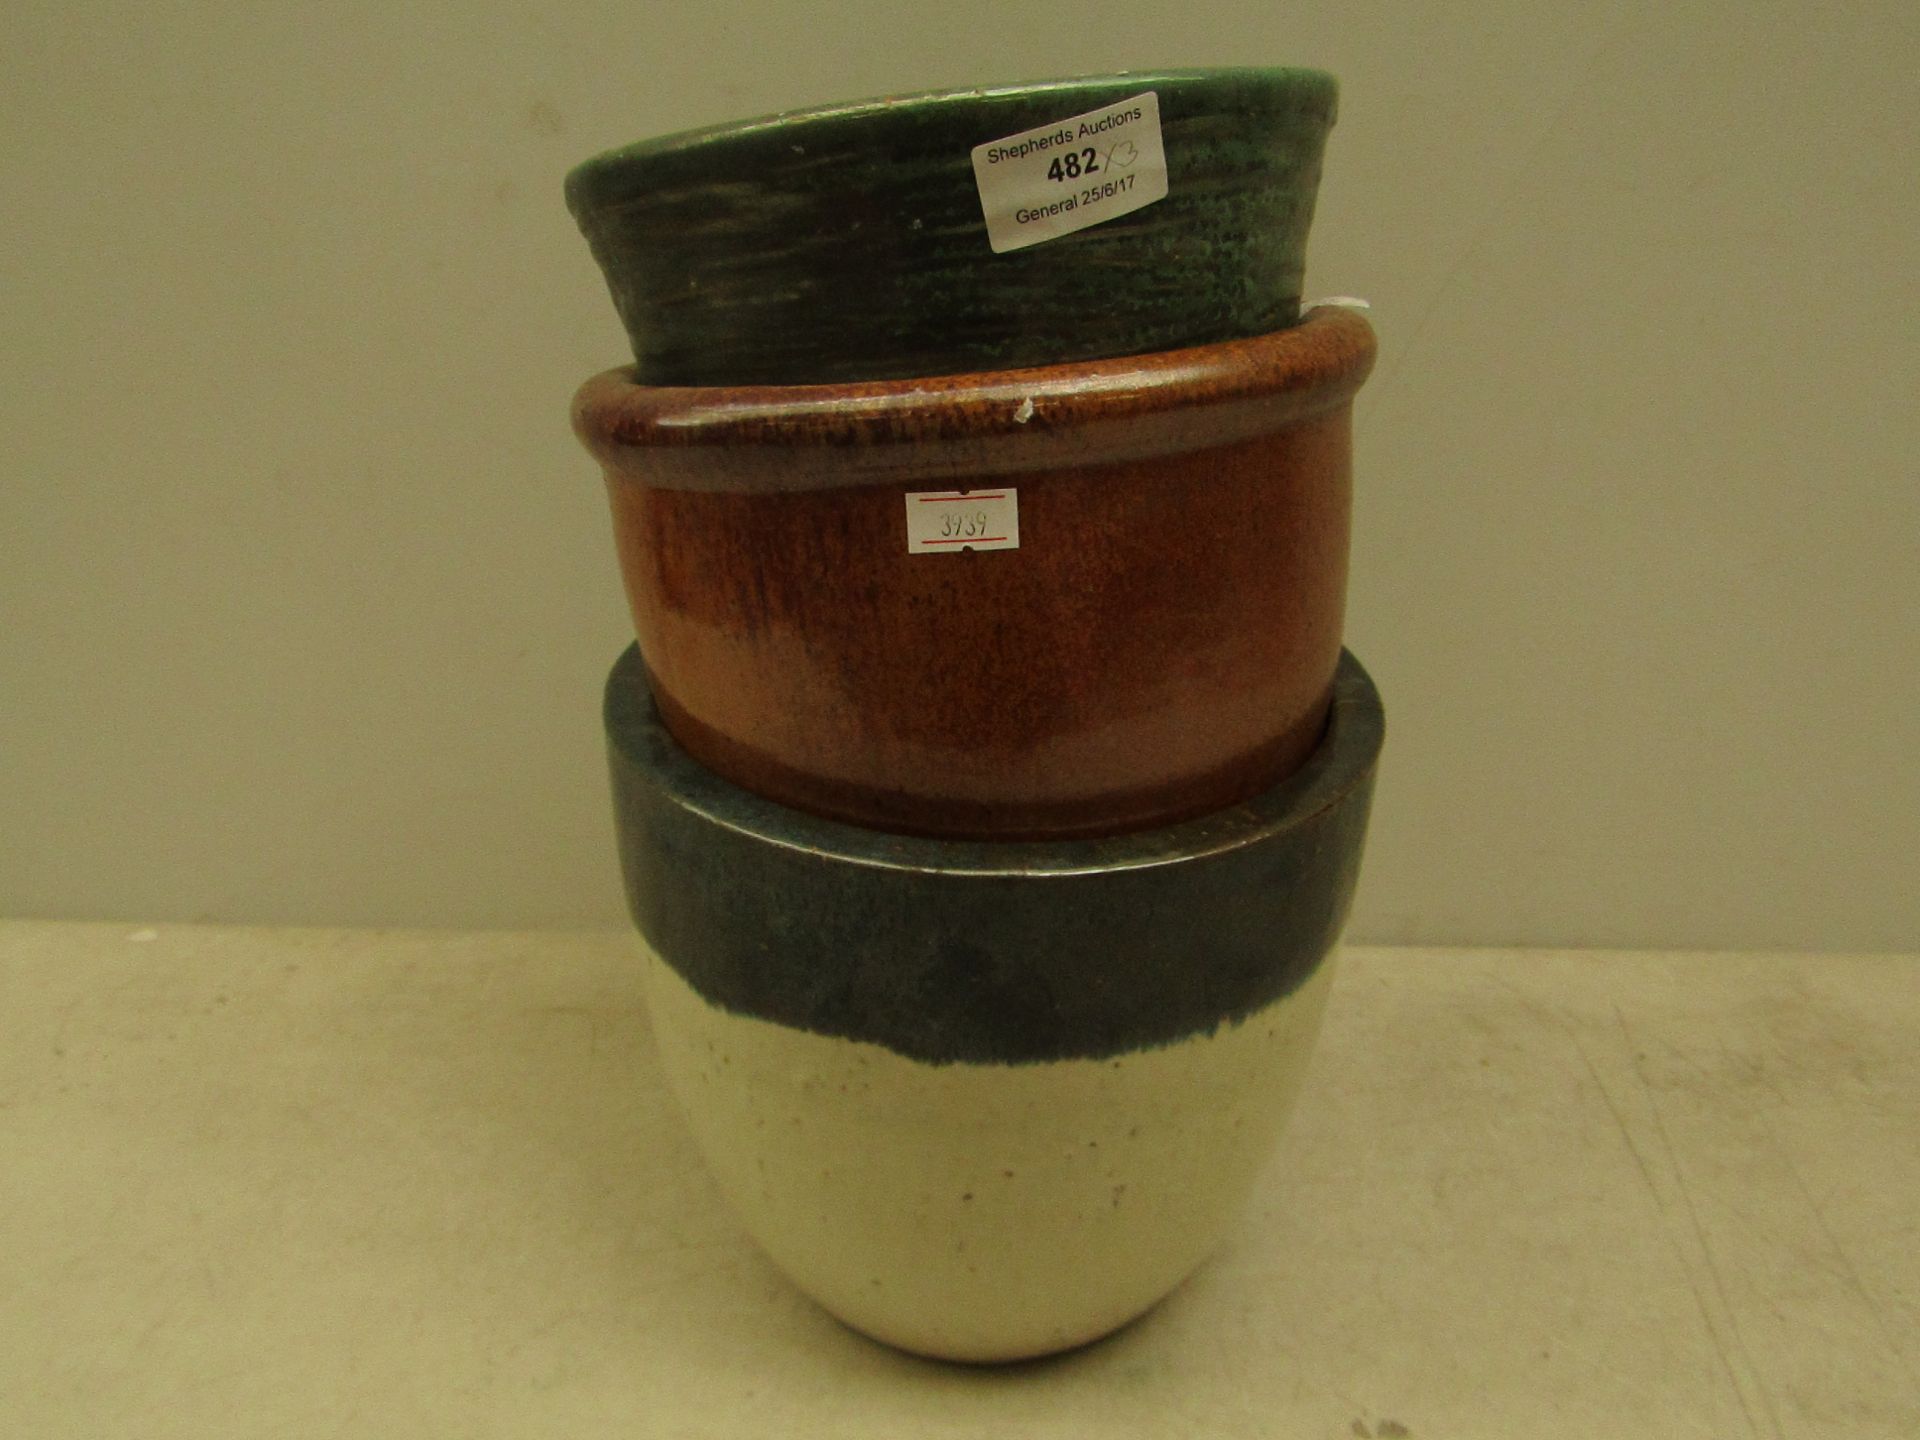 3x Small ceramic plant pots